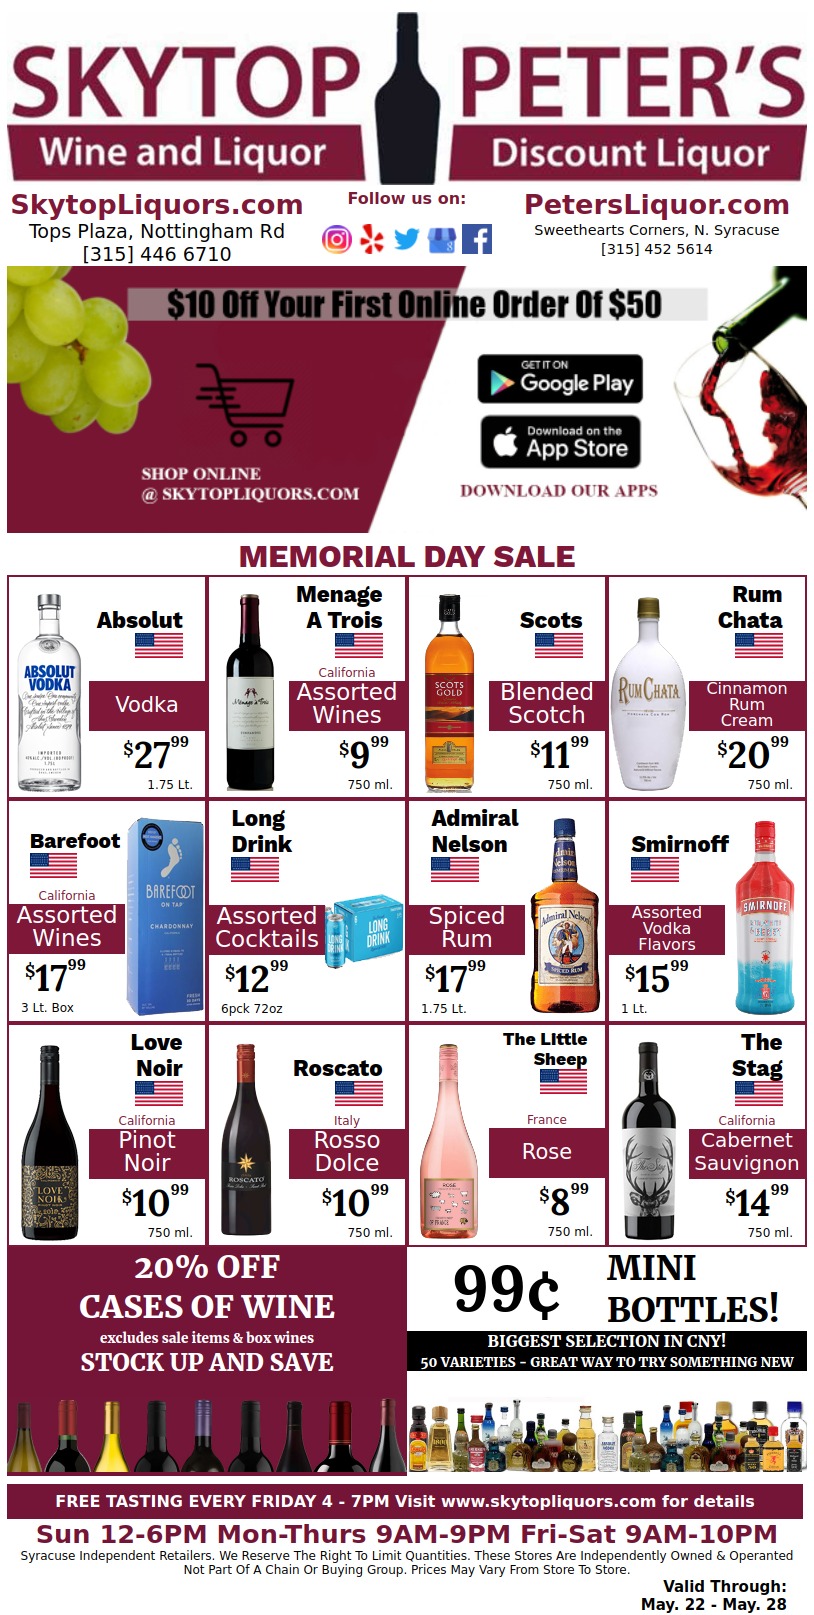 CNY wine and liquor sales